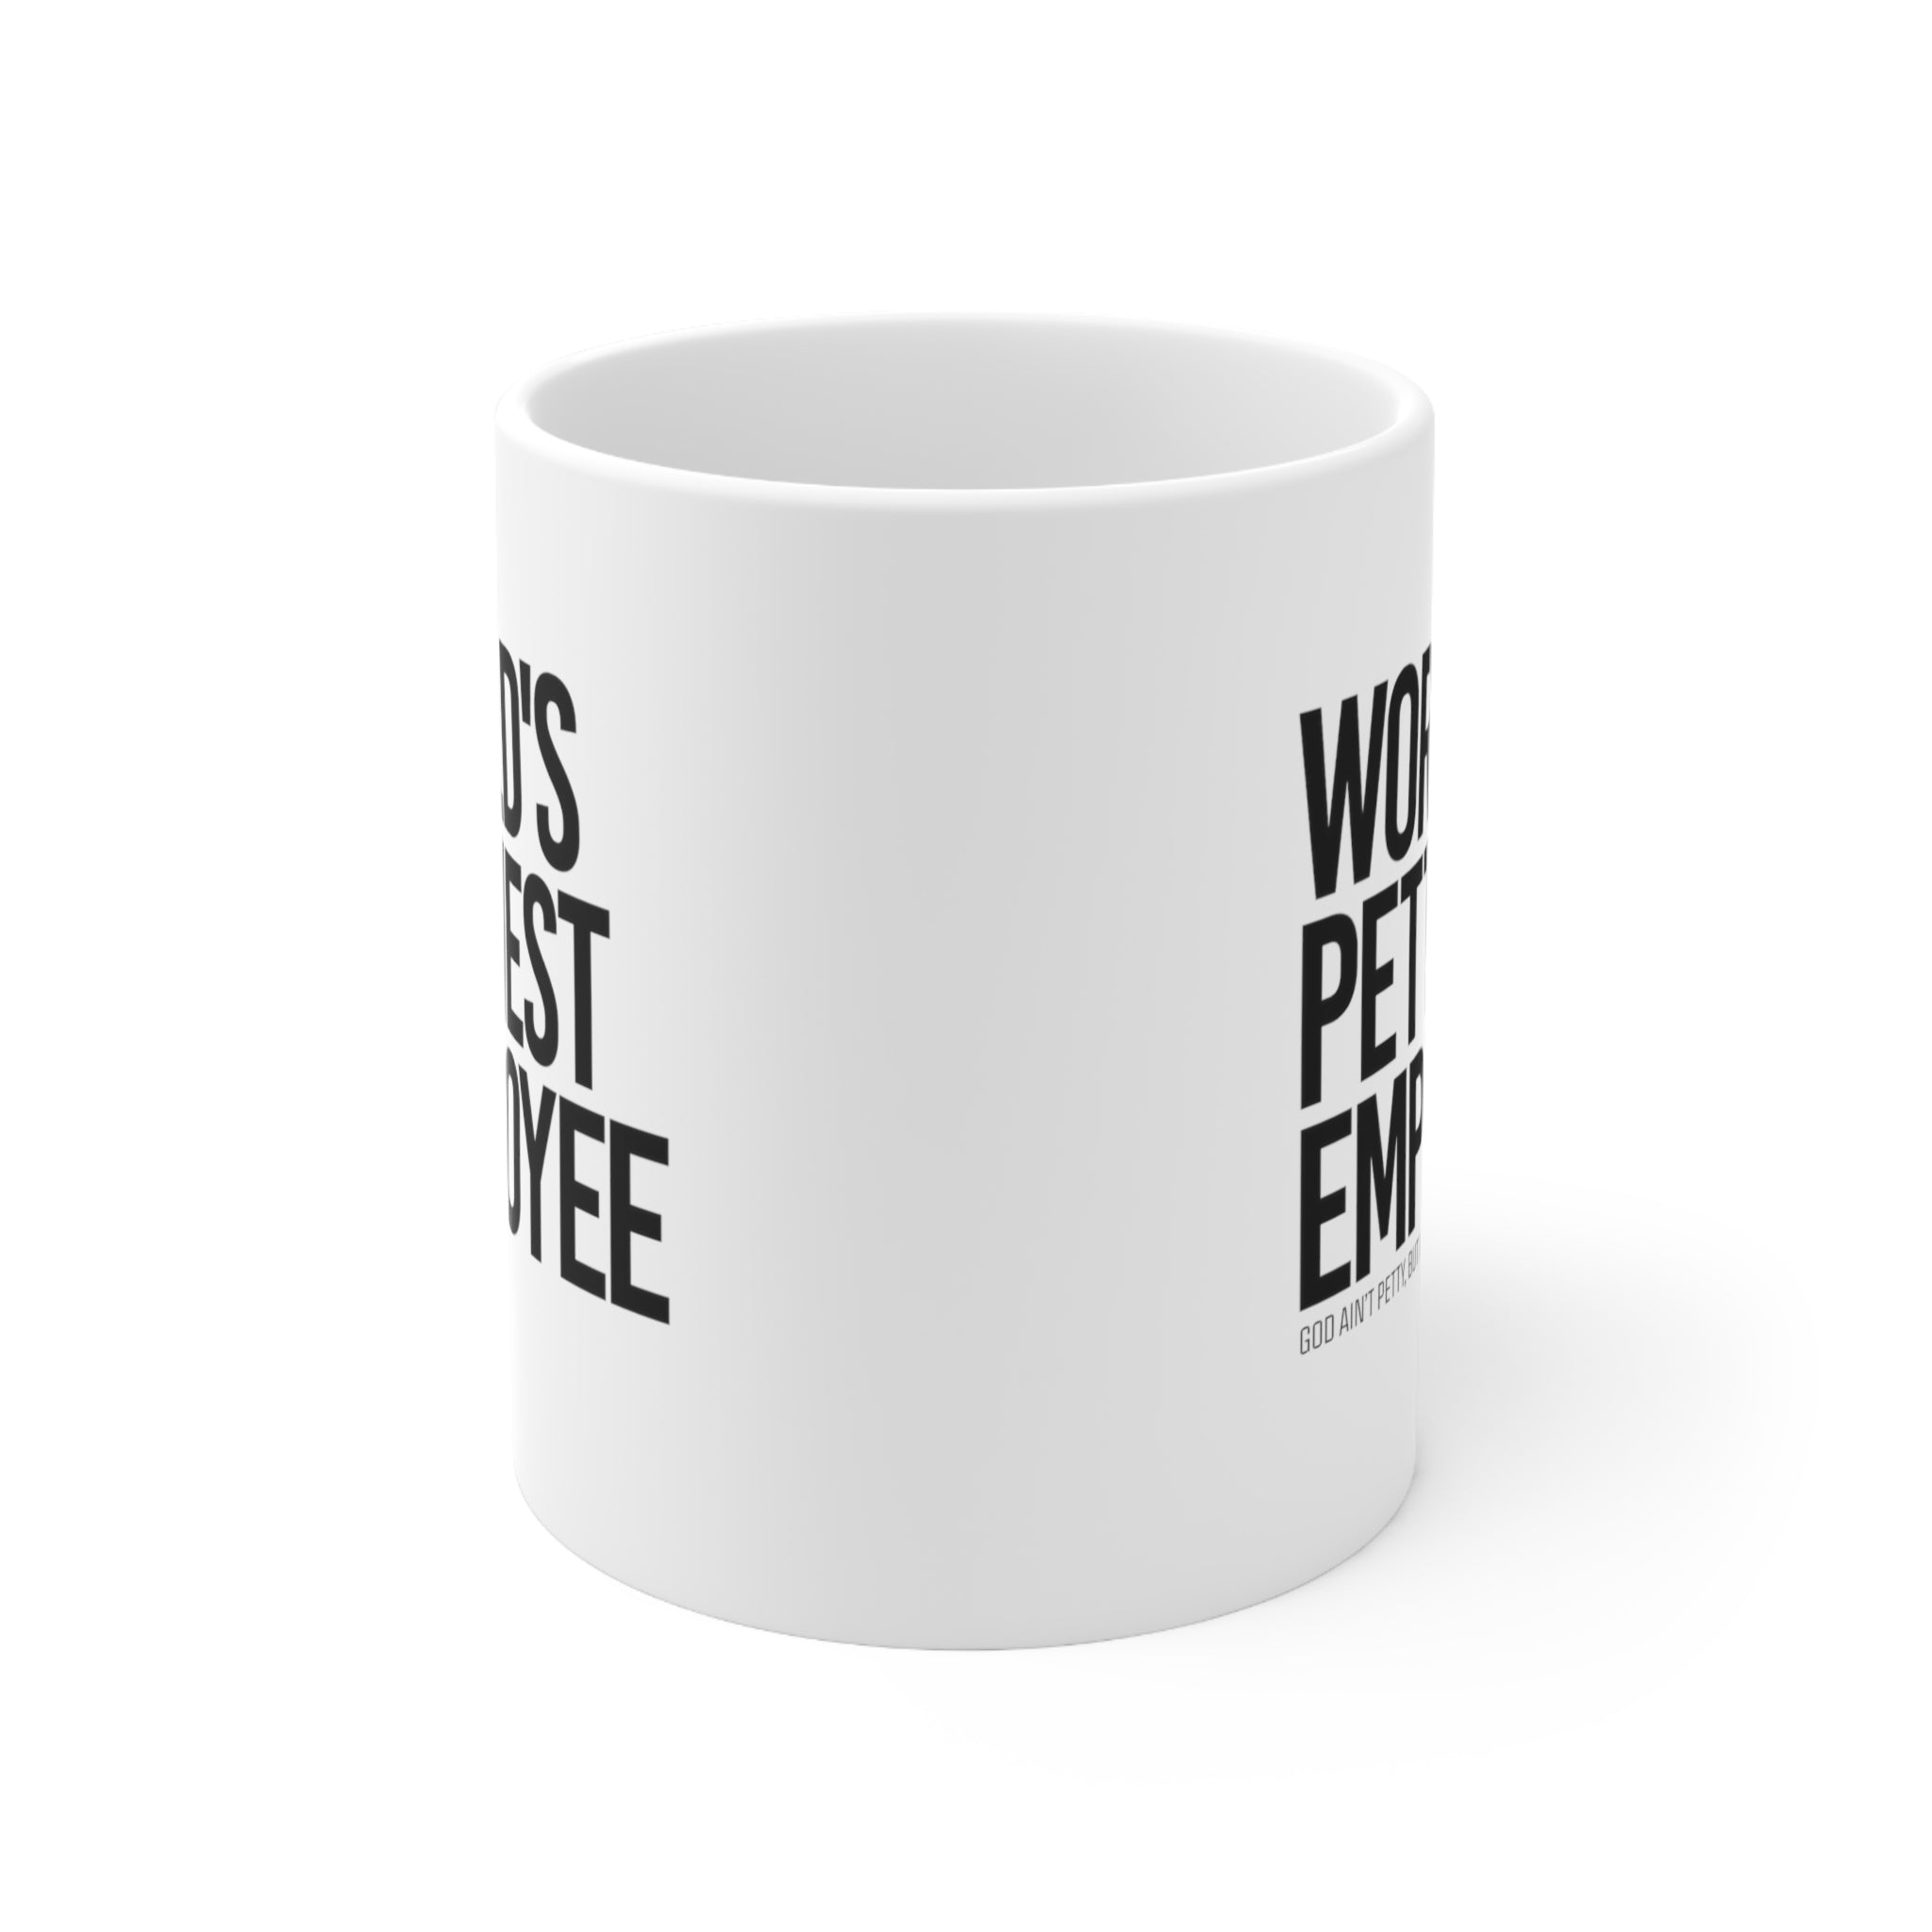 World's Pettiest Employee Mug 11oz (White/Black)-Mug-The Original God Ain't Petty But I Am